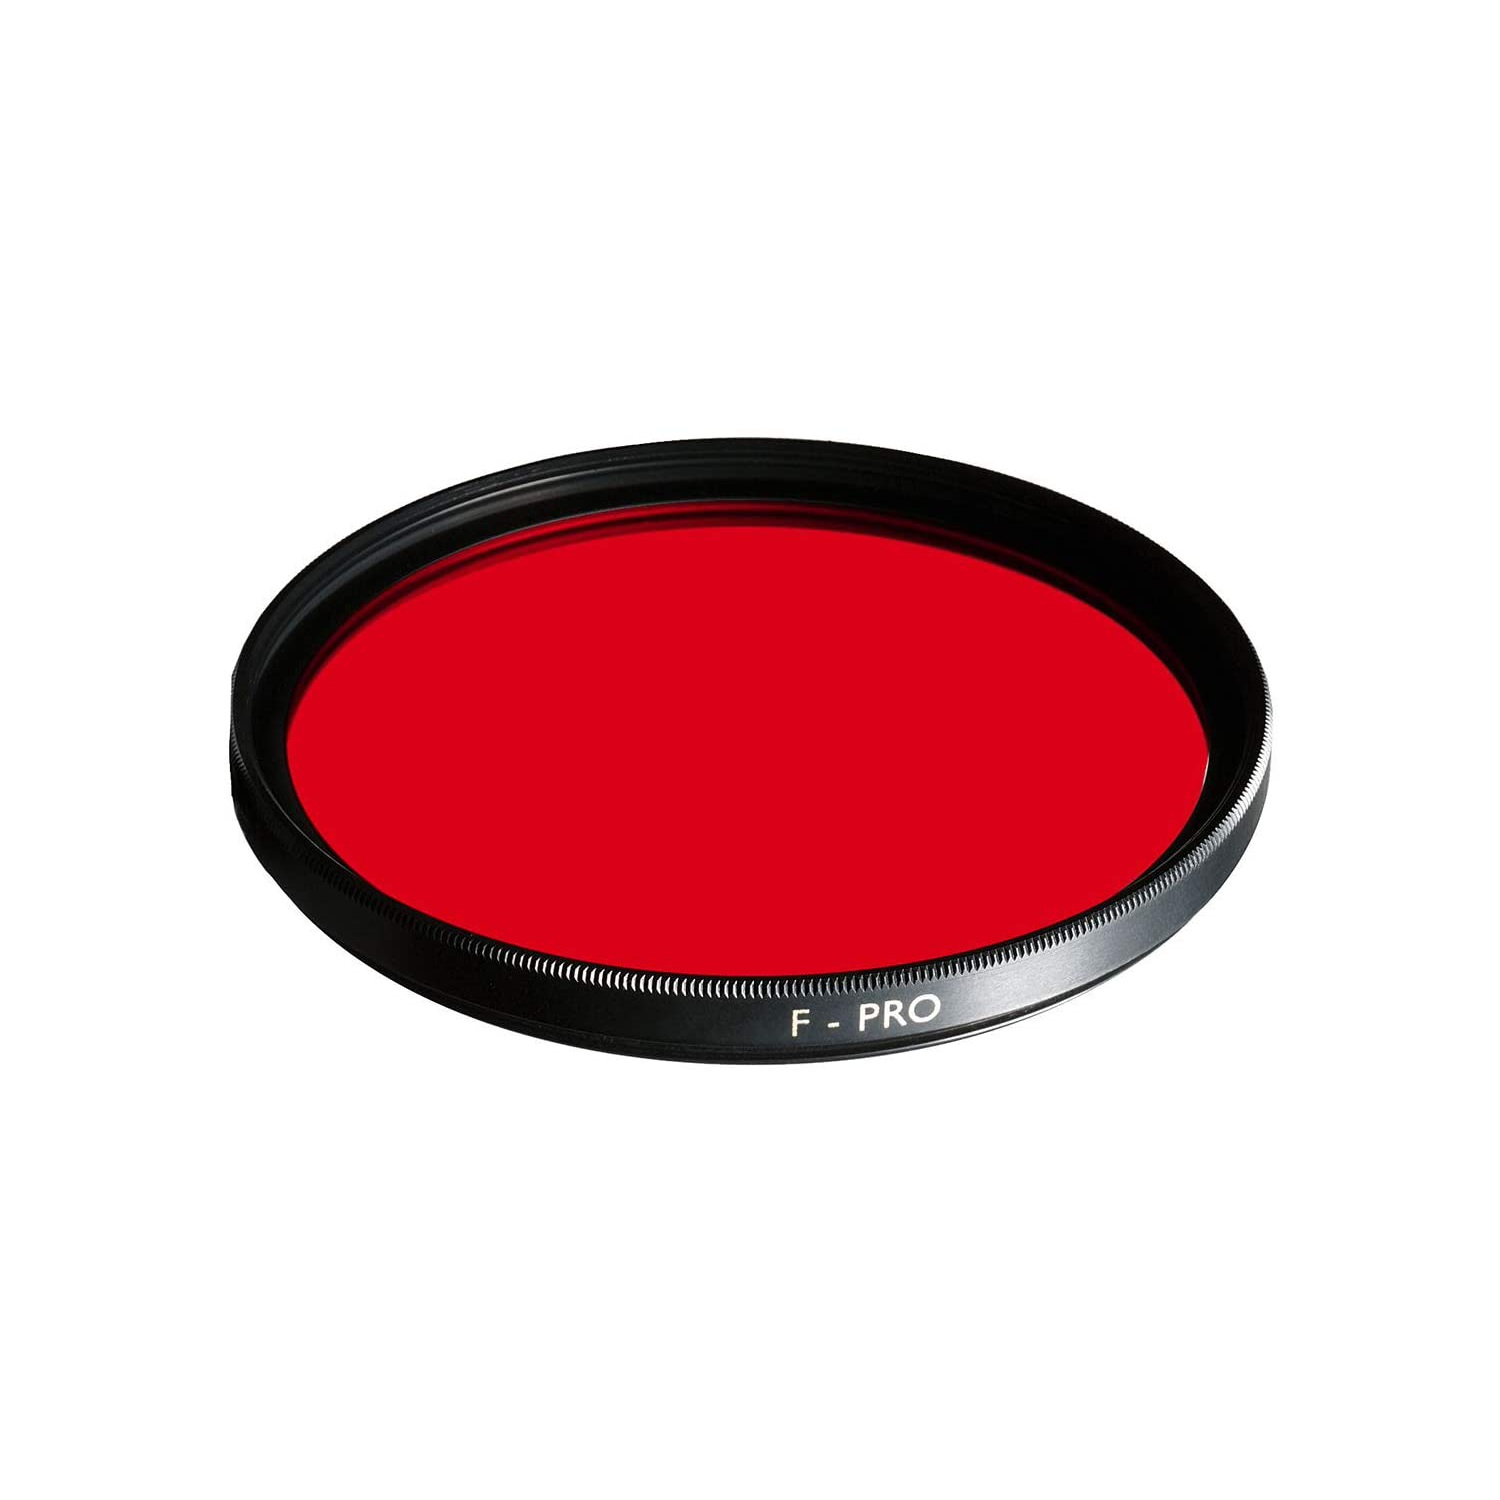 B + w filtre clair rouge 090 MRC - 72 mm